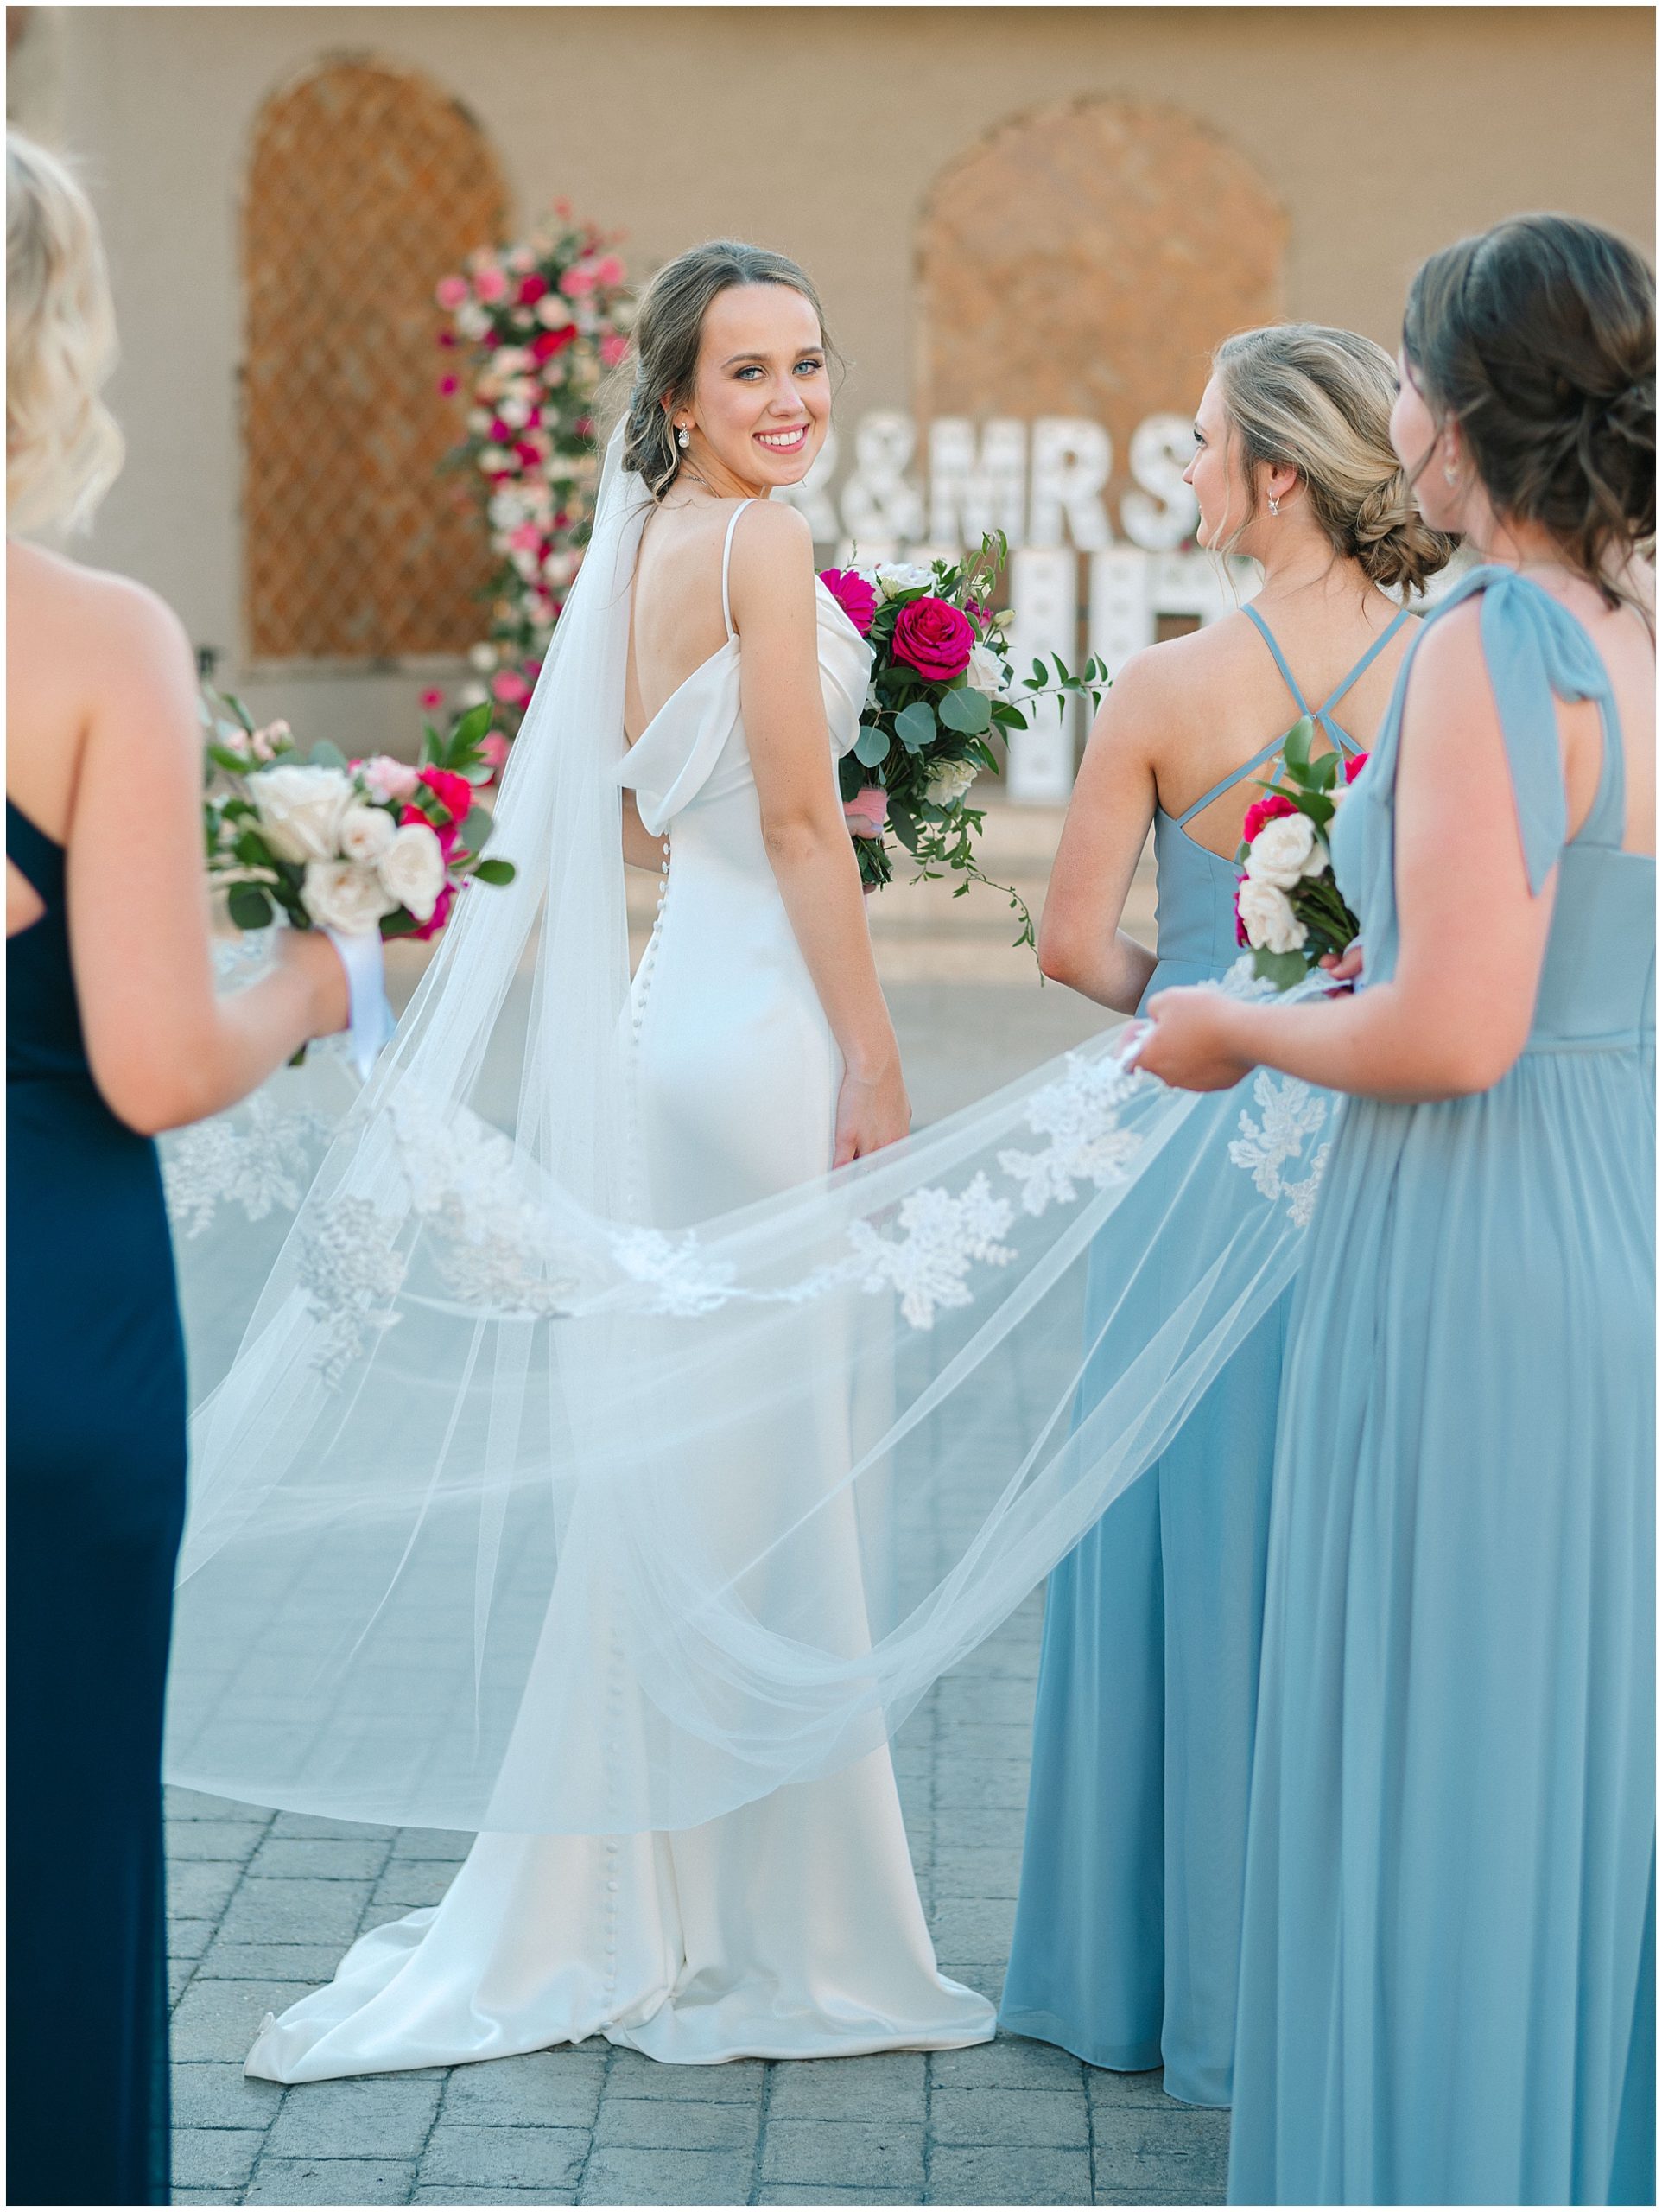 Bride with sleek wedding gown at Dvine Grace Vineyard